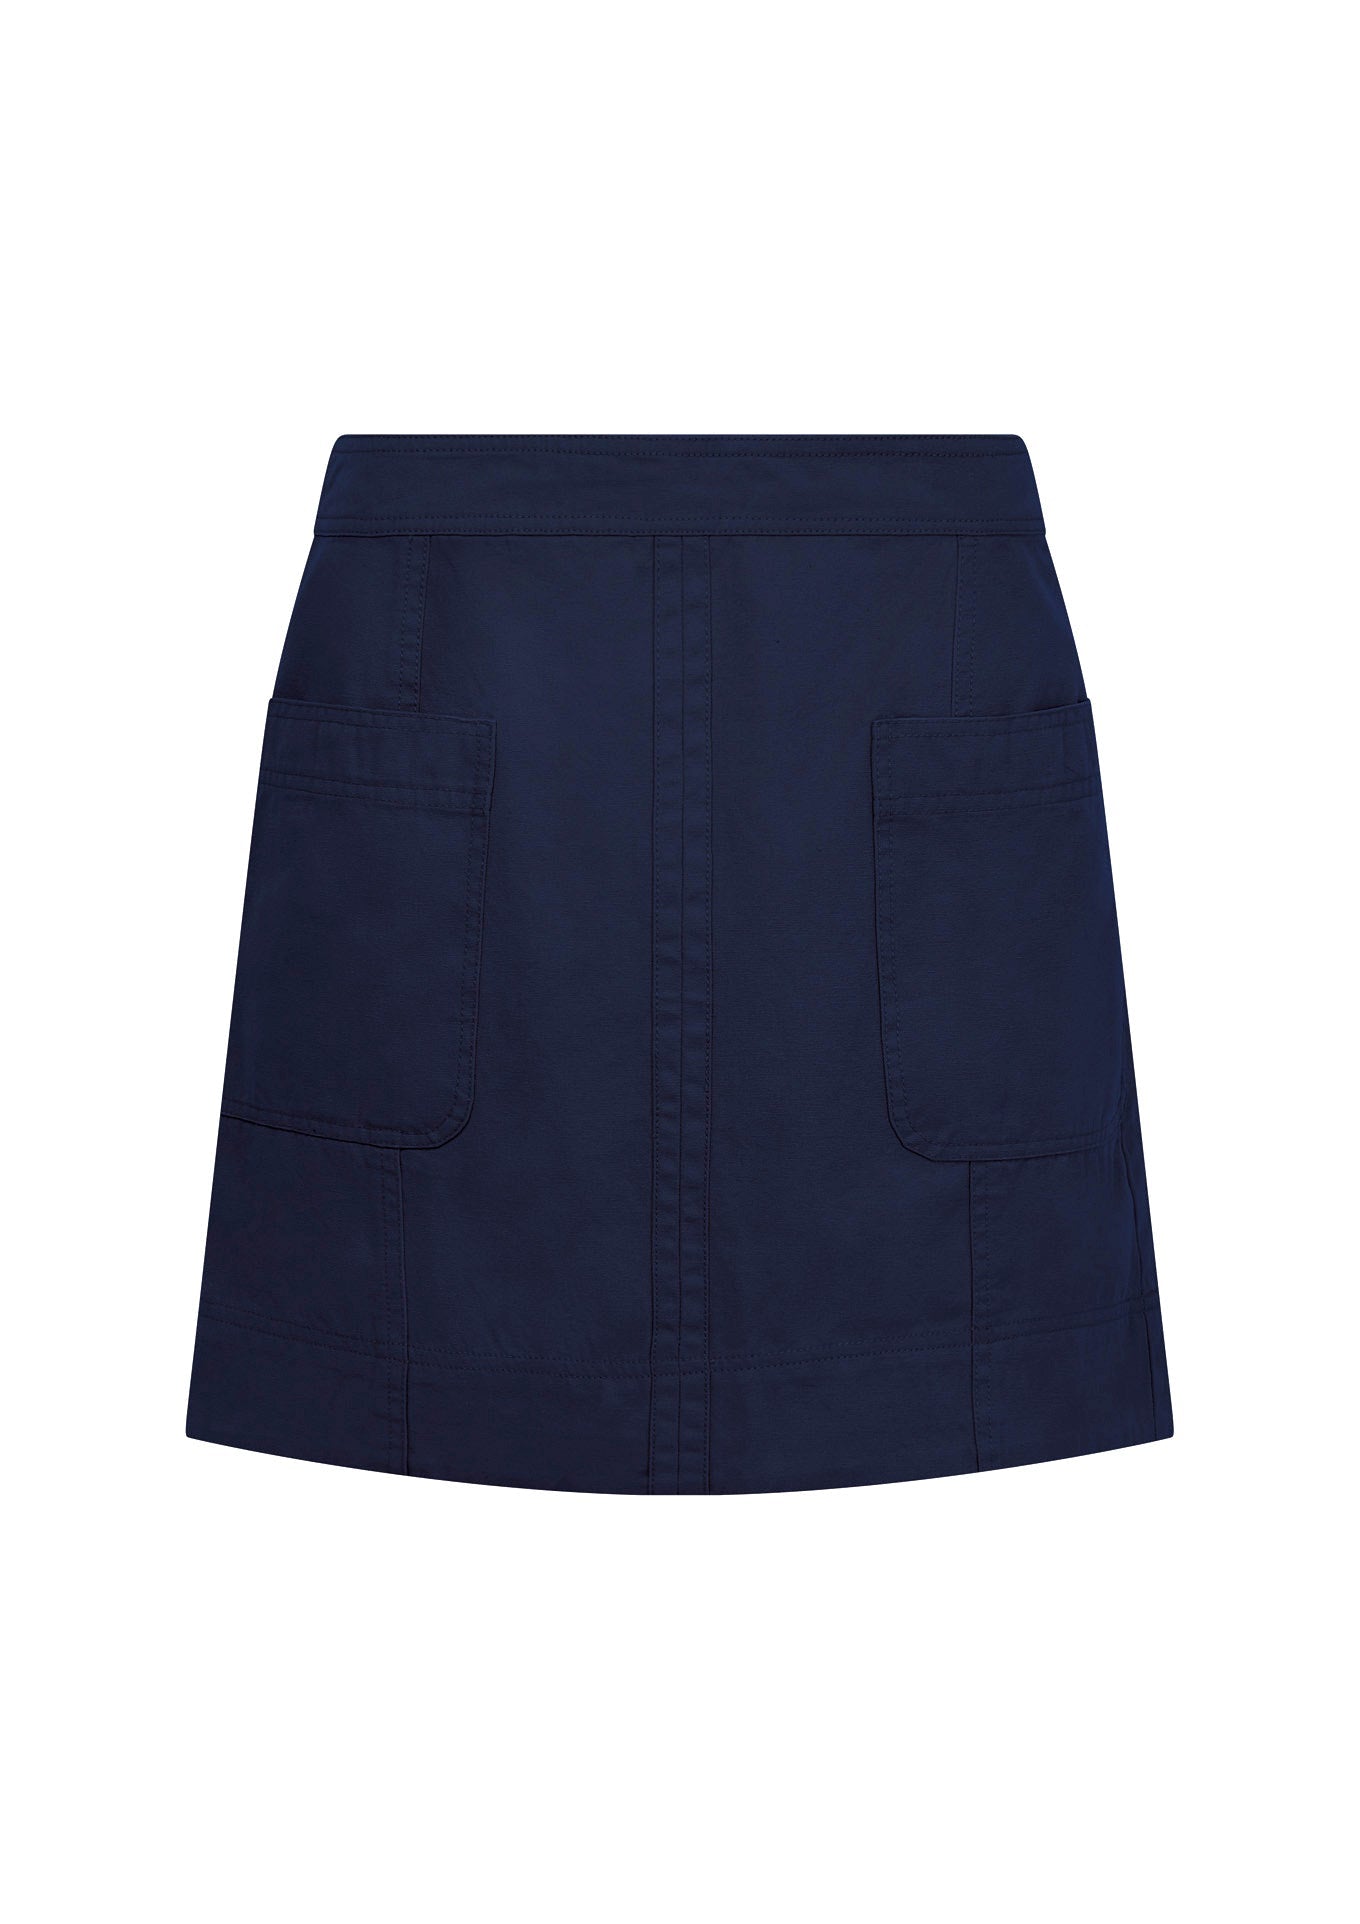 Navy blue mini skirt SUKI made from 100% organic cotton by Komodo